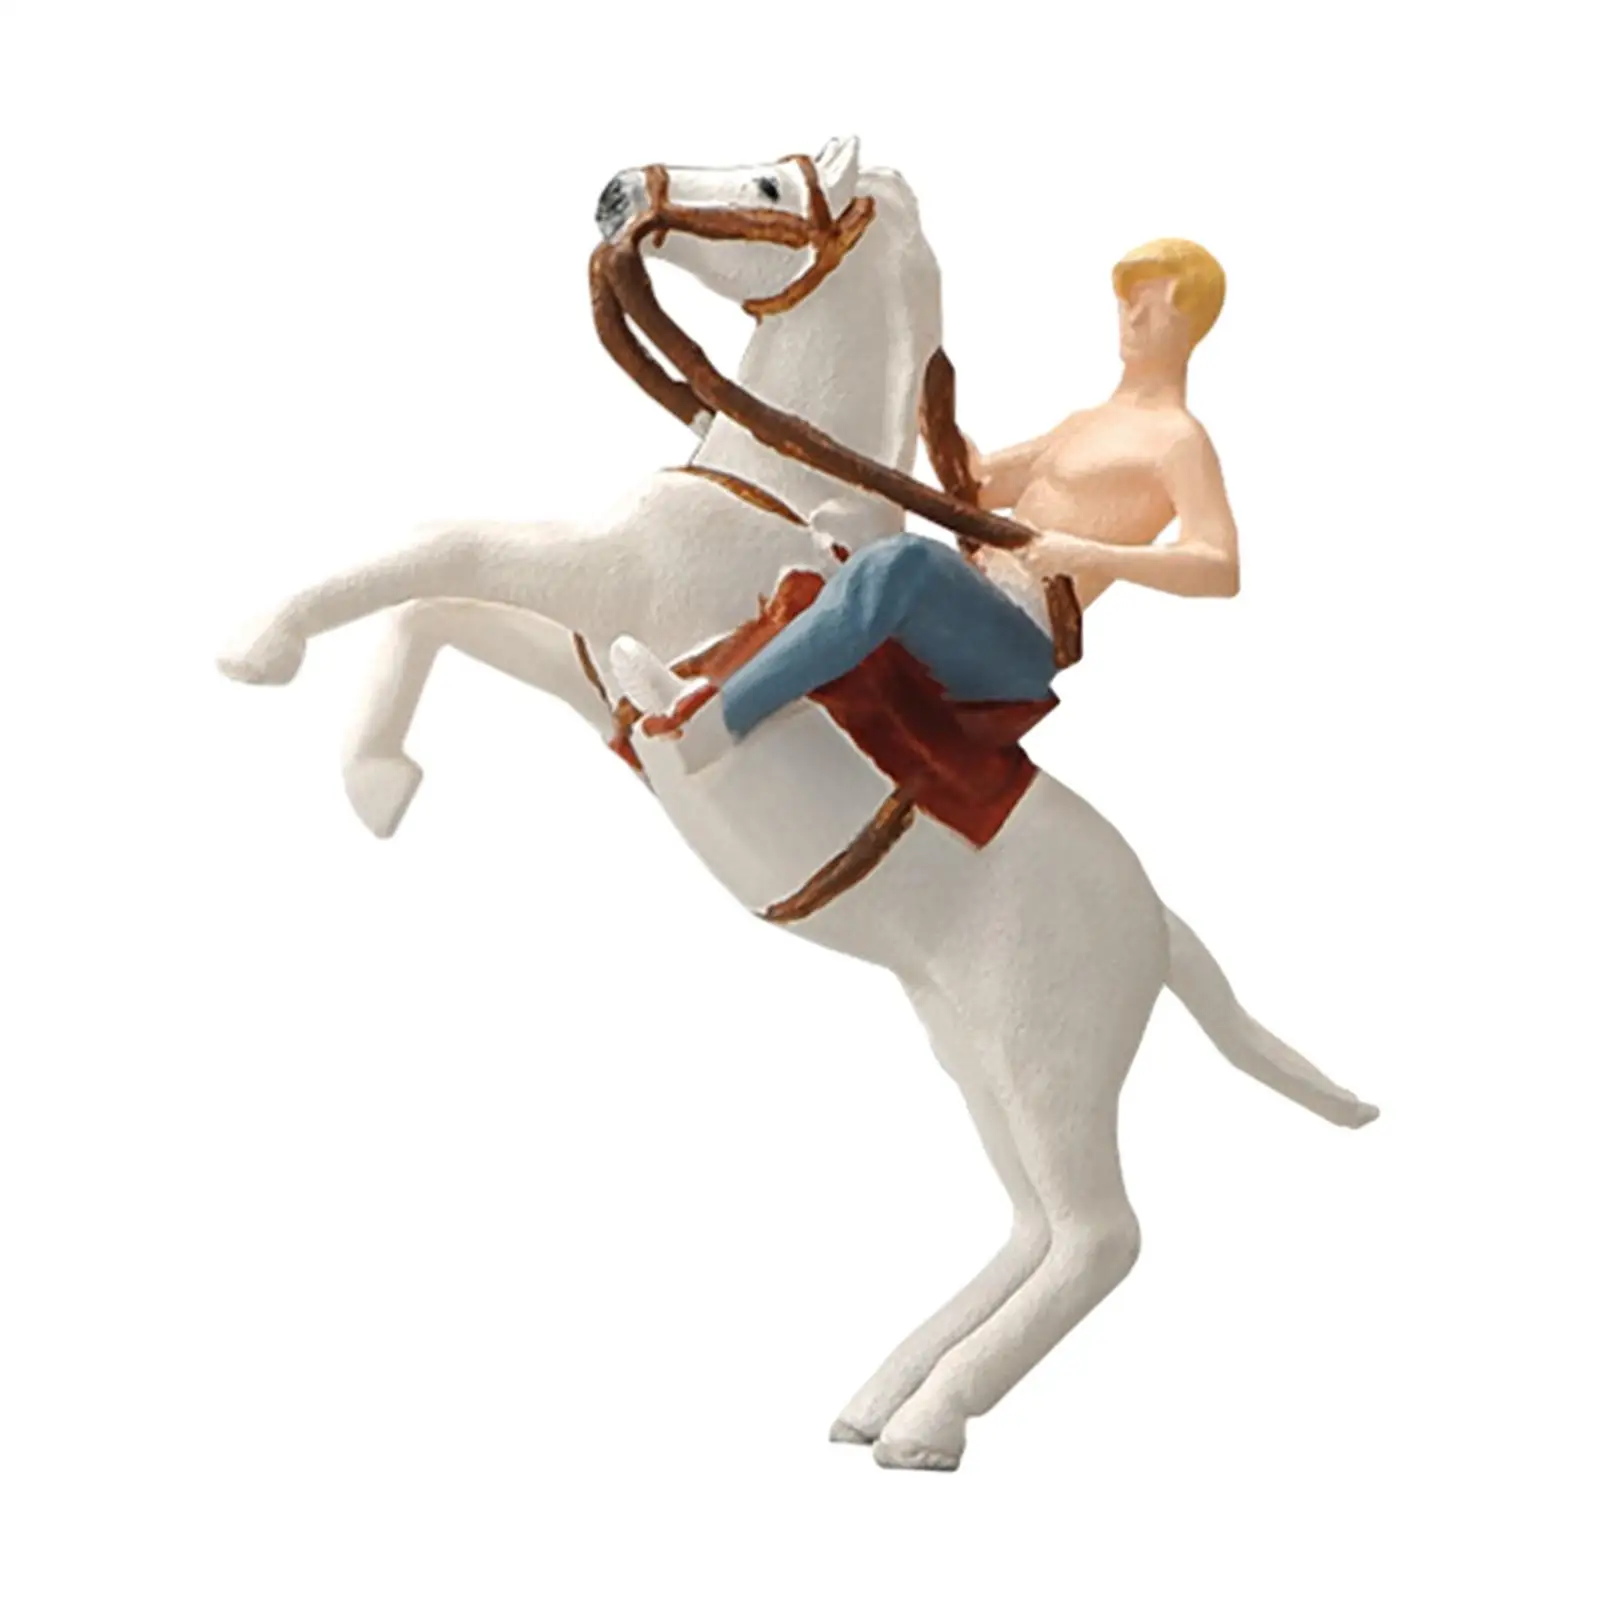 Miniature Resin Figurine 1/64 People Model Collection 1:64 Scale Male on Horseback for Desktop Ornament Micro Landscape